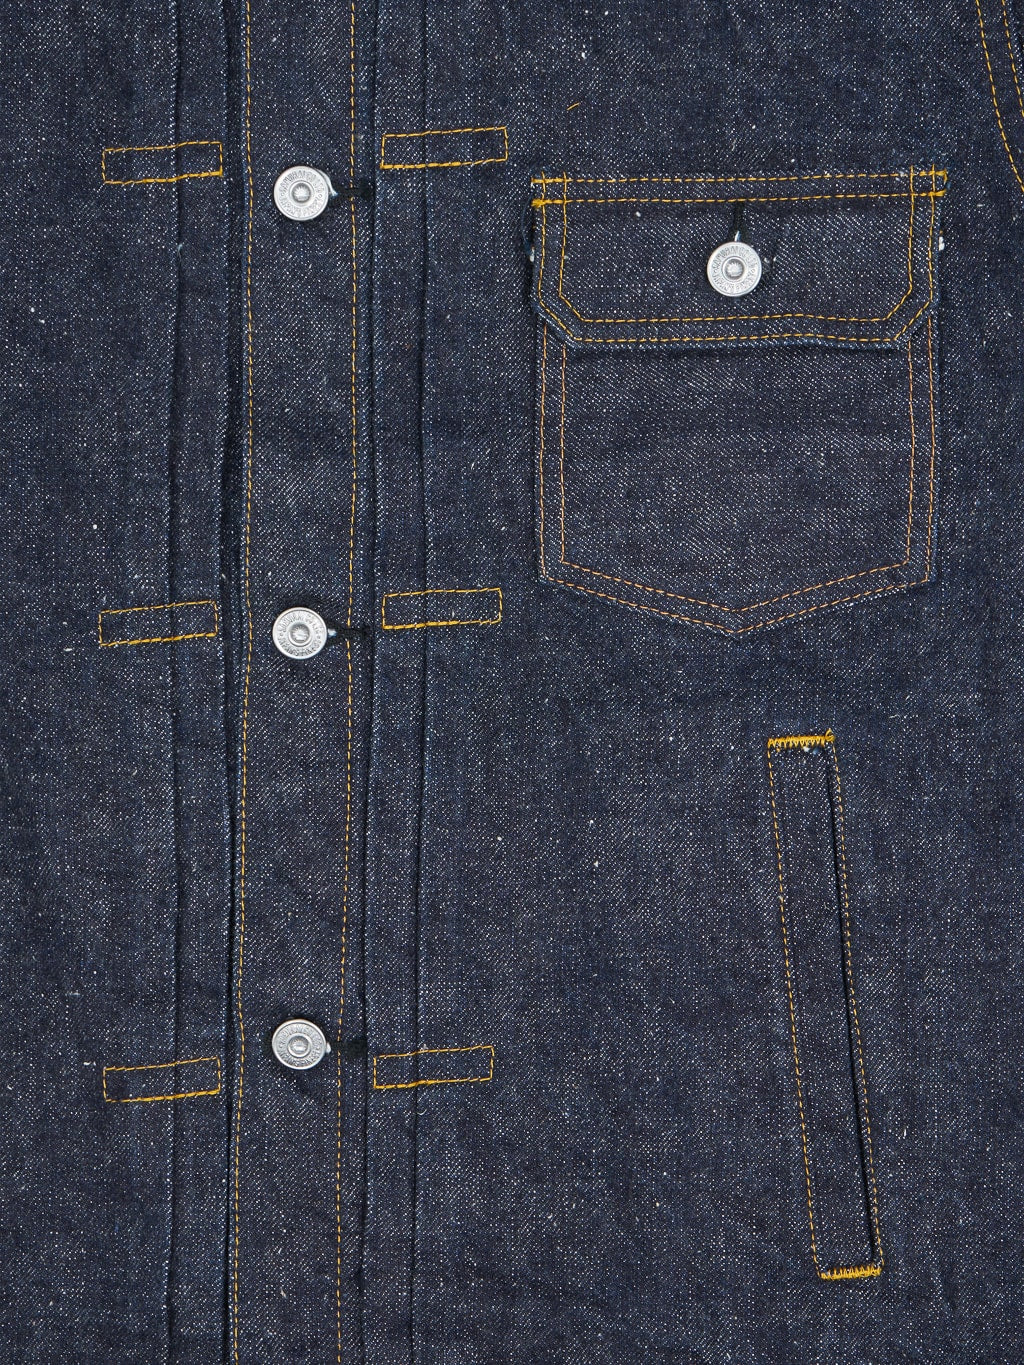 Samurai Jeans S5512PX 15oz Otokogi Denim Type 1 Jacket fabric